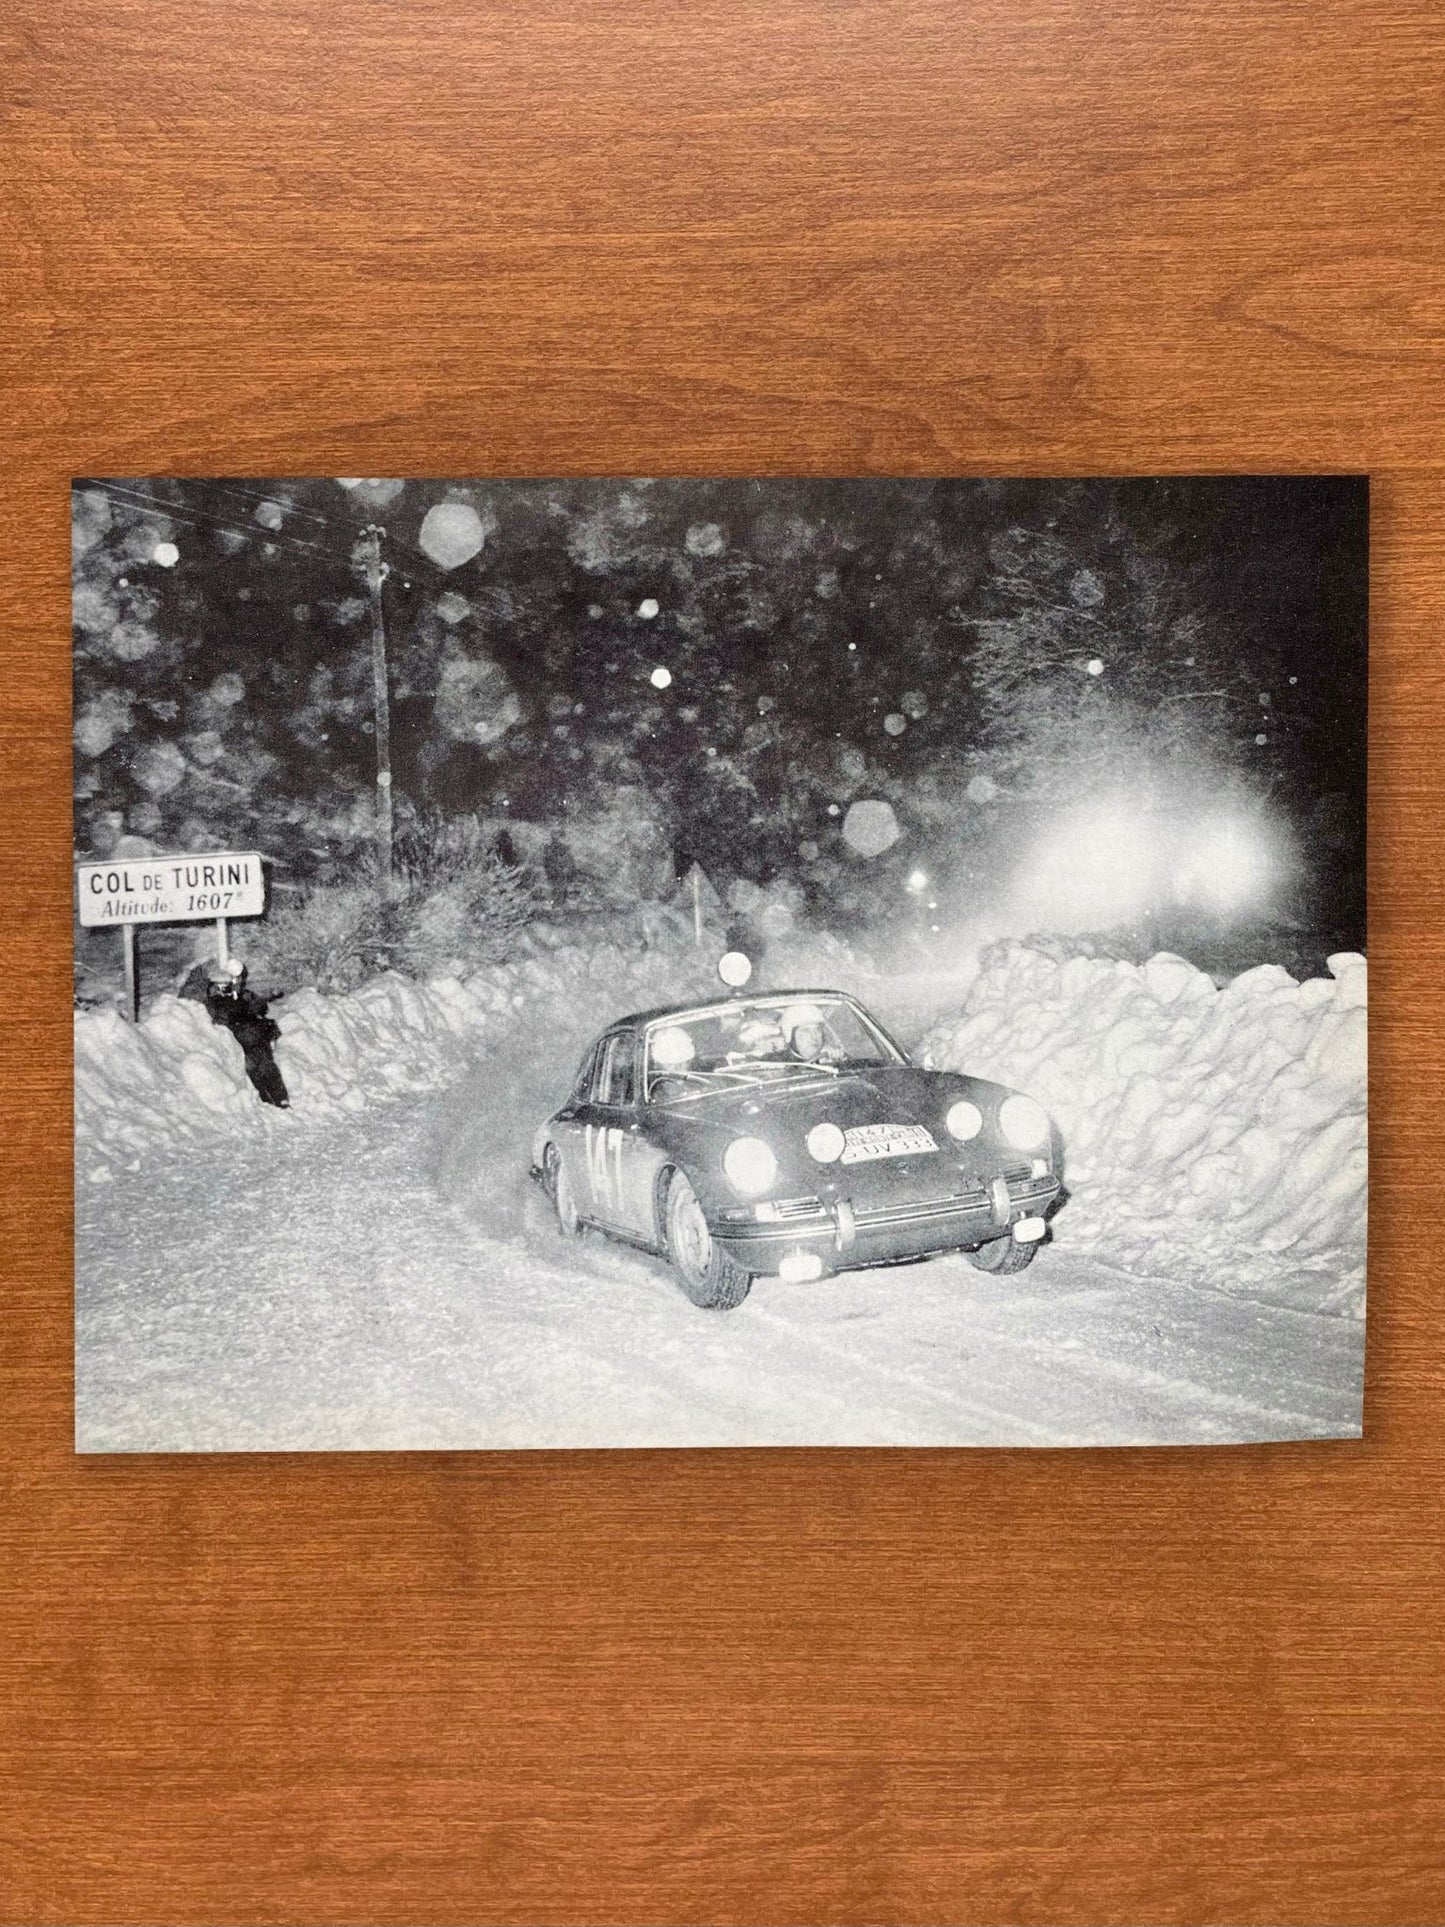 1965 Porsche 911 photo from Monte Carlo Rally Advertisement